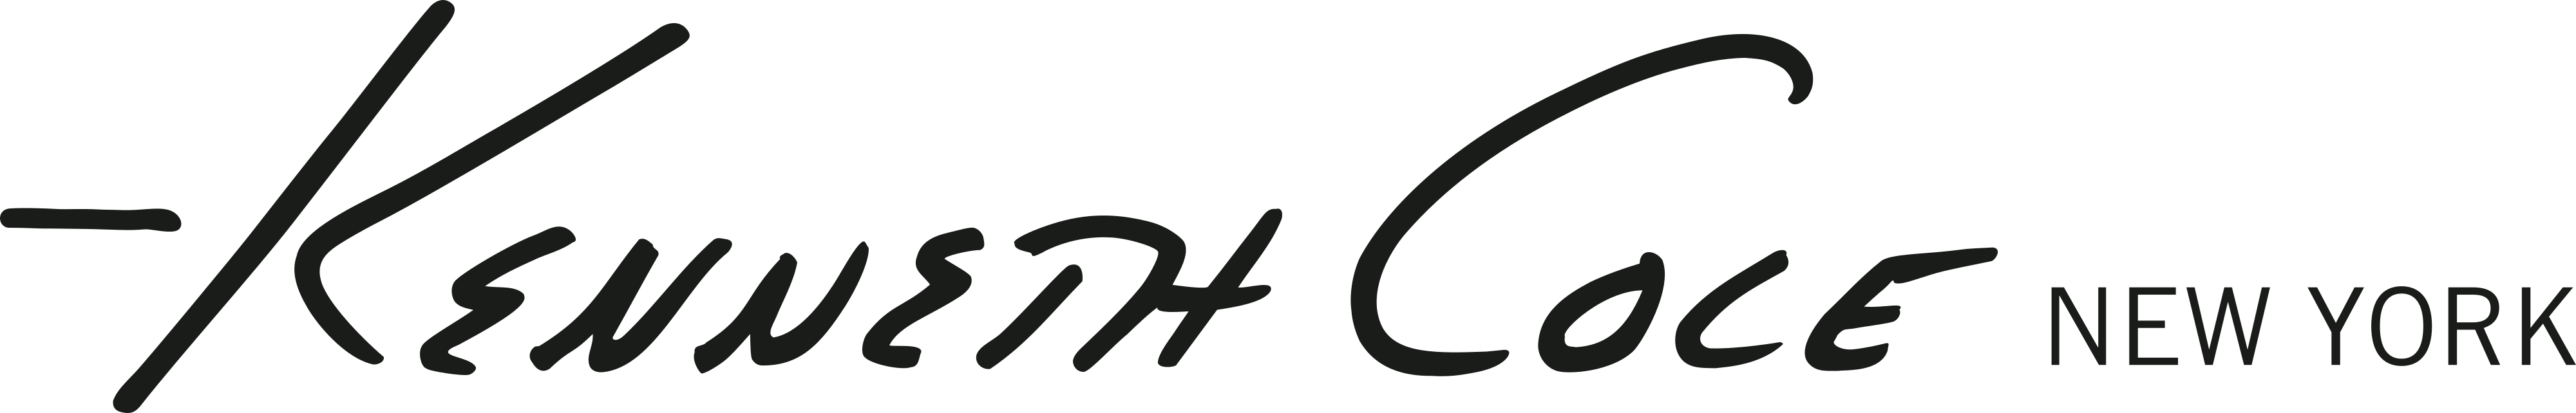 Kenneth Cole logo - download.